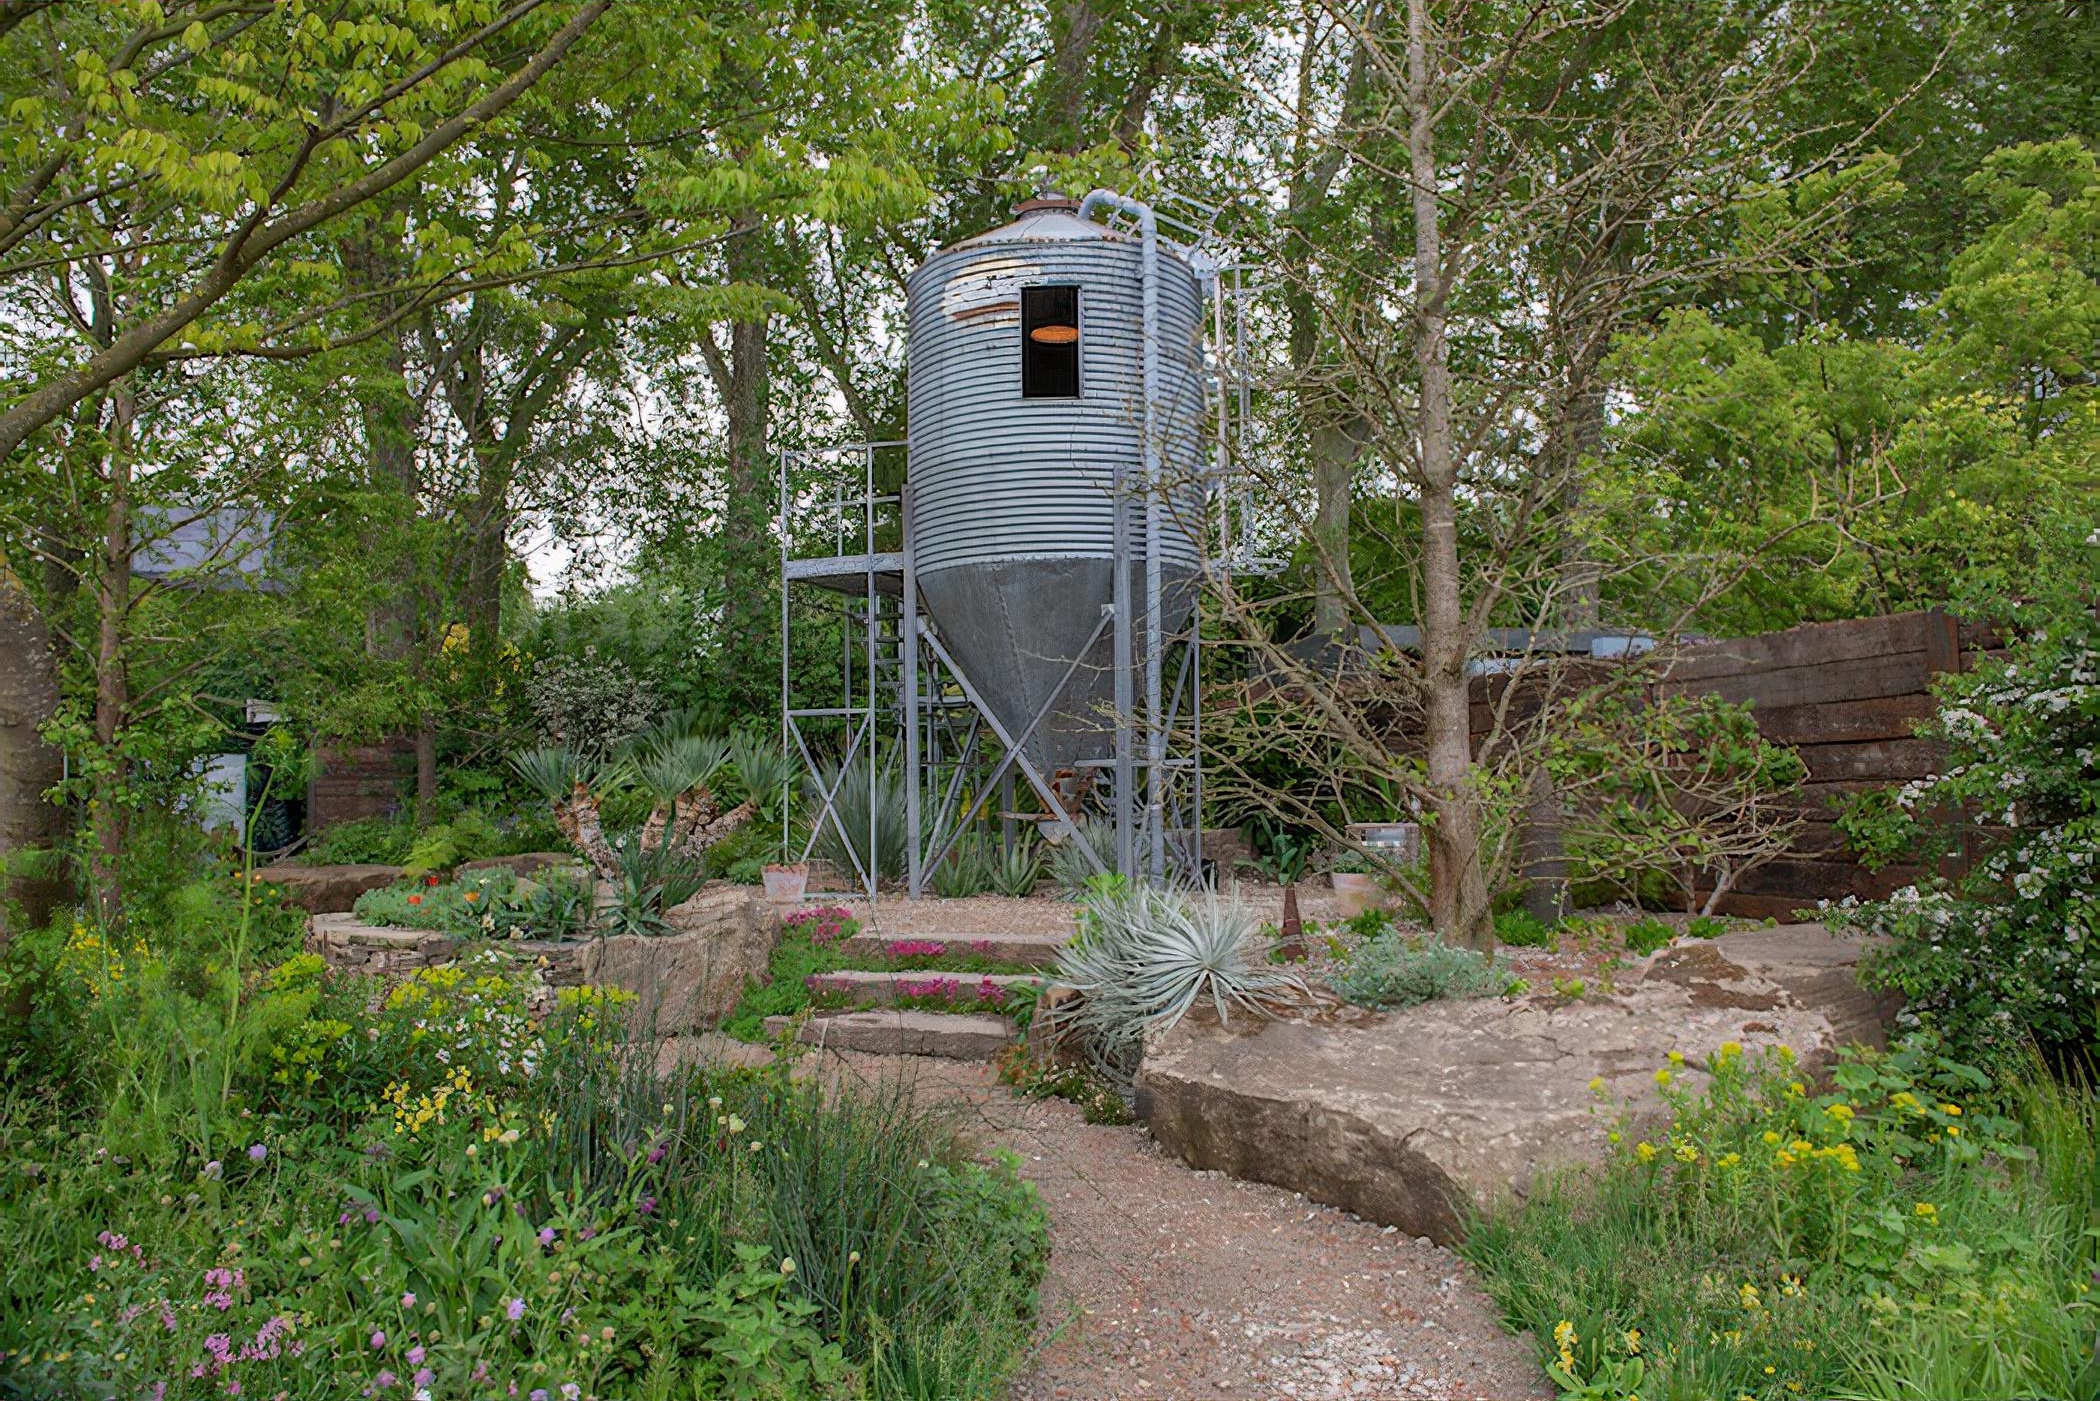 The Resilience Garden created by award-winning designer Sarah Eberle RHS Chelsea Flower Show 2019